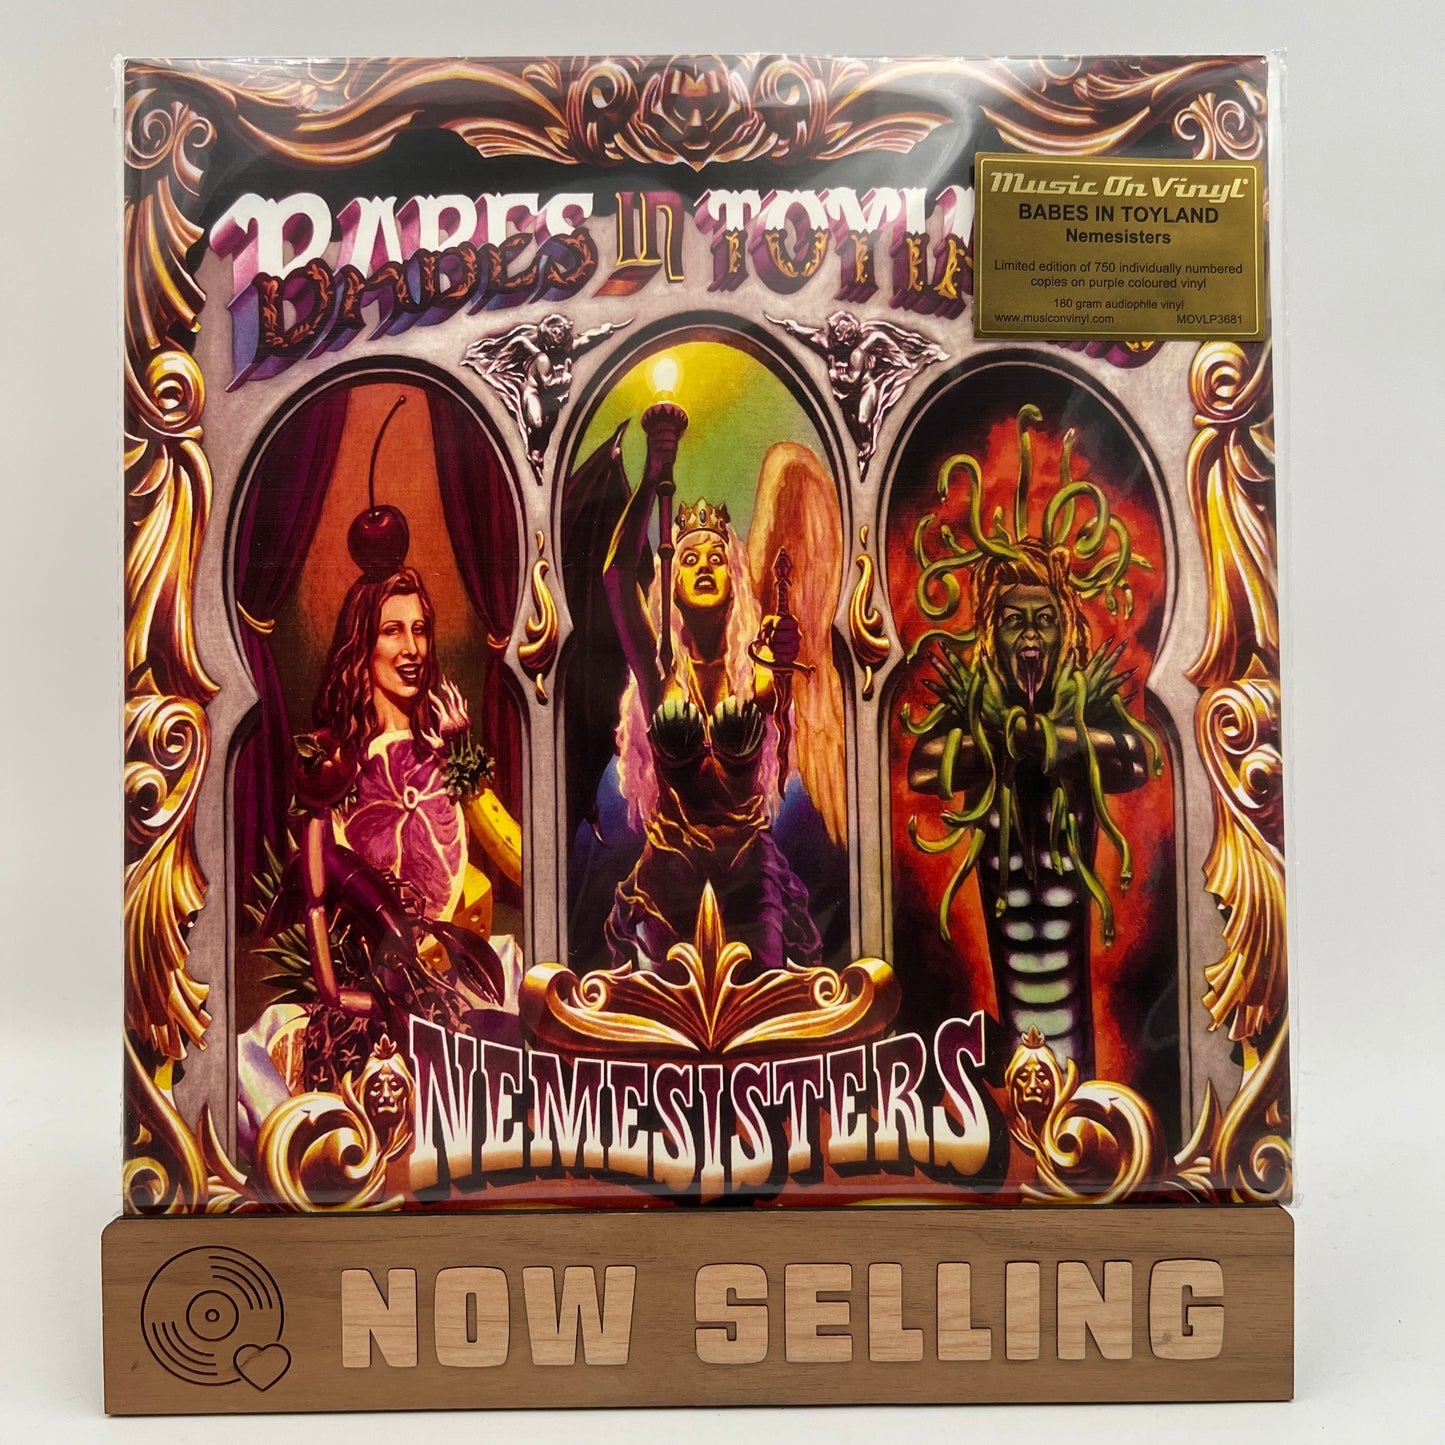 Babes In Toyland - Nemesisters Vinyl LP Reissue Purple Numbered